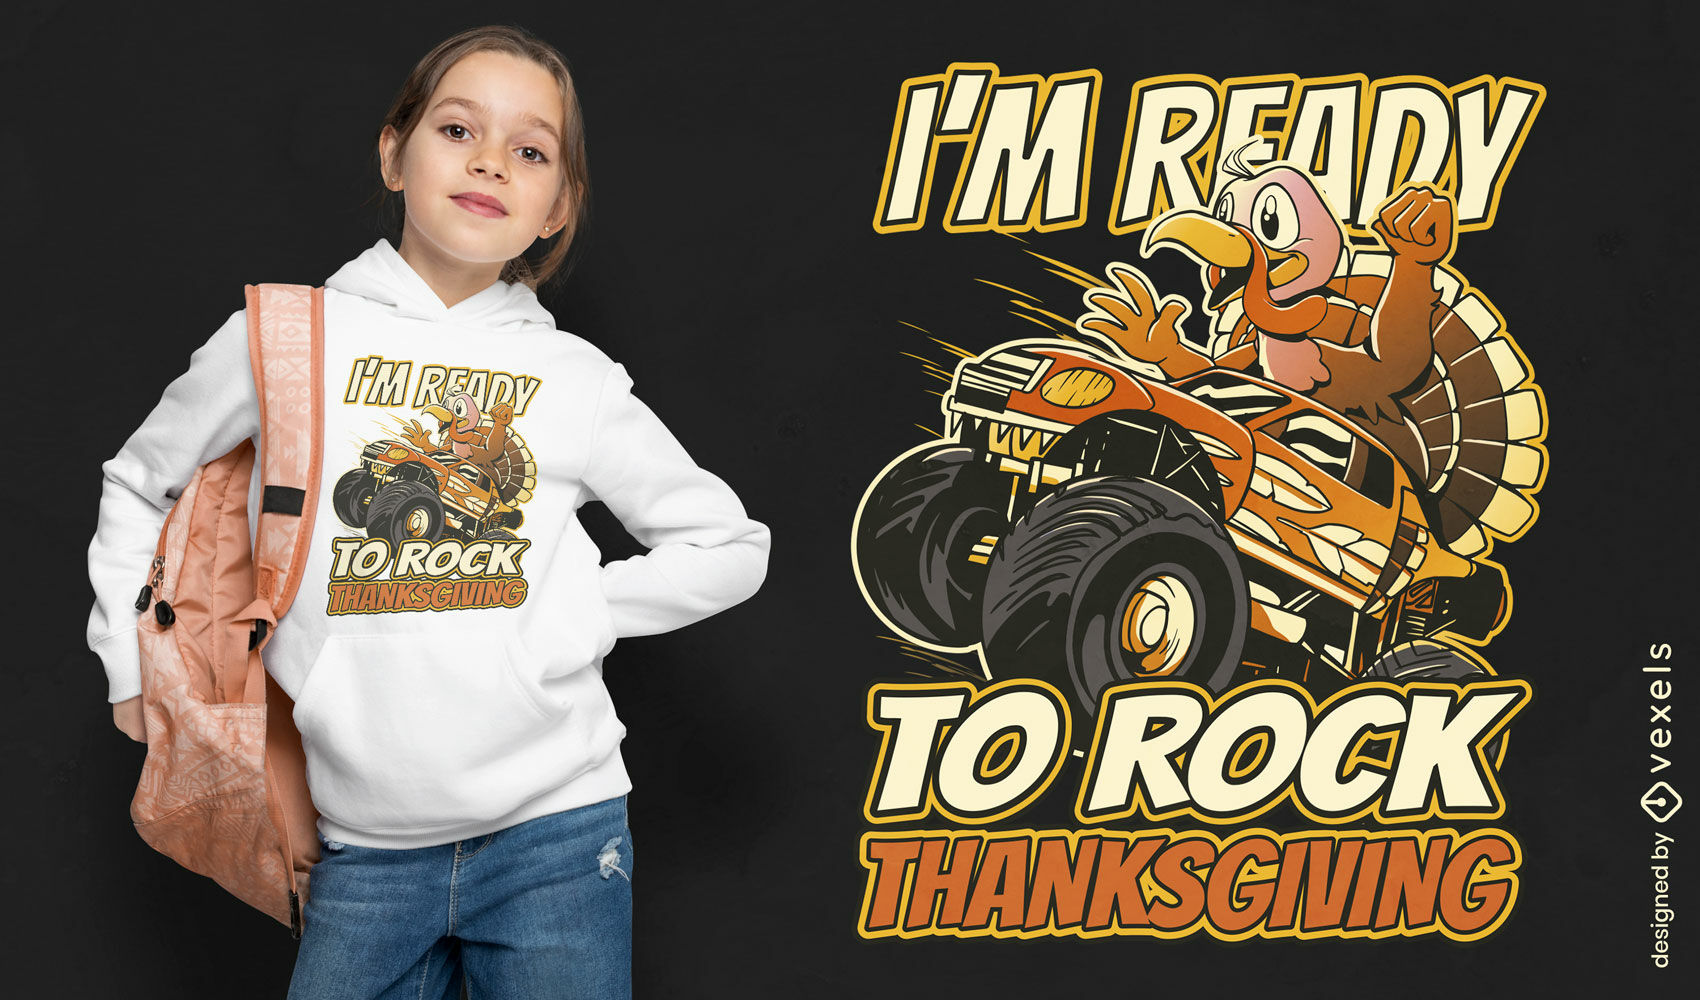 Ready to rock thanksgiving children t-shirt design